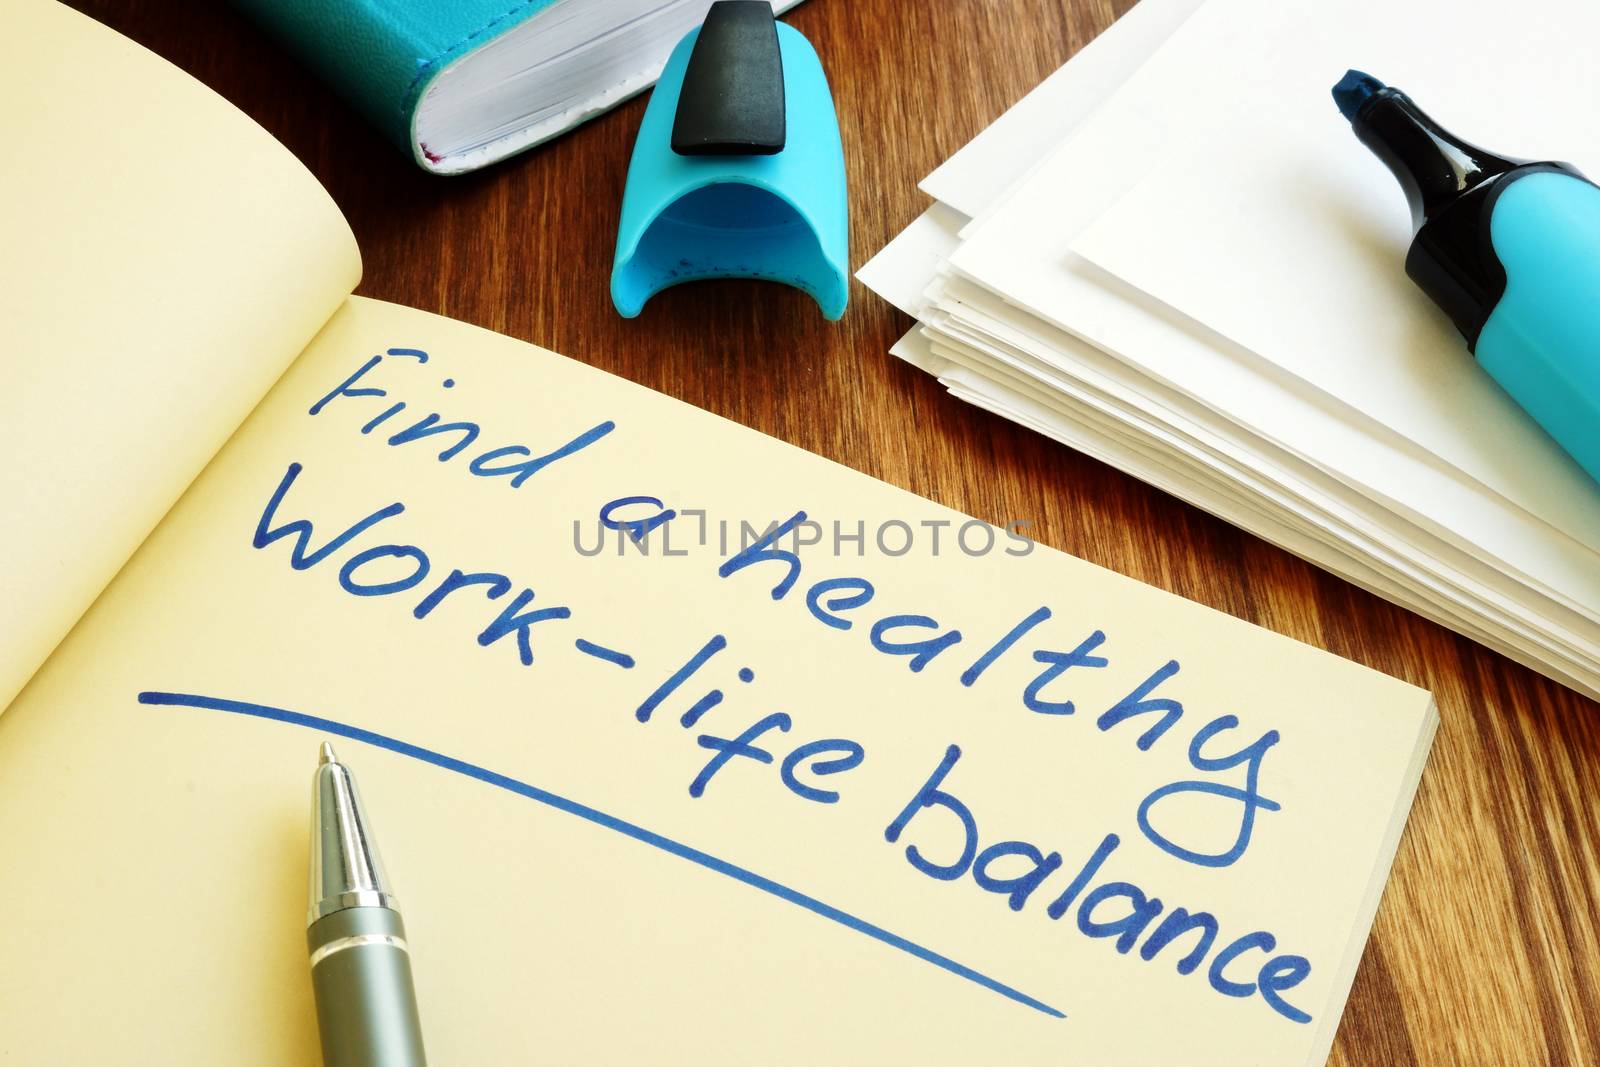 Find a healthy work-life balance motivation sign.